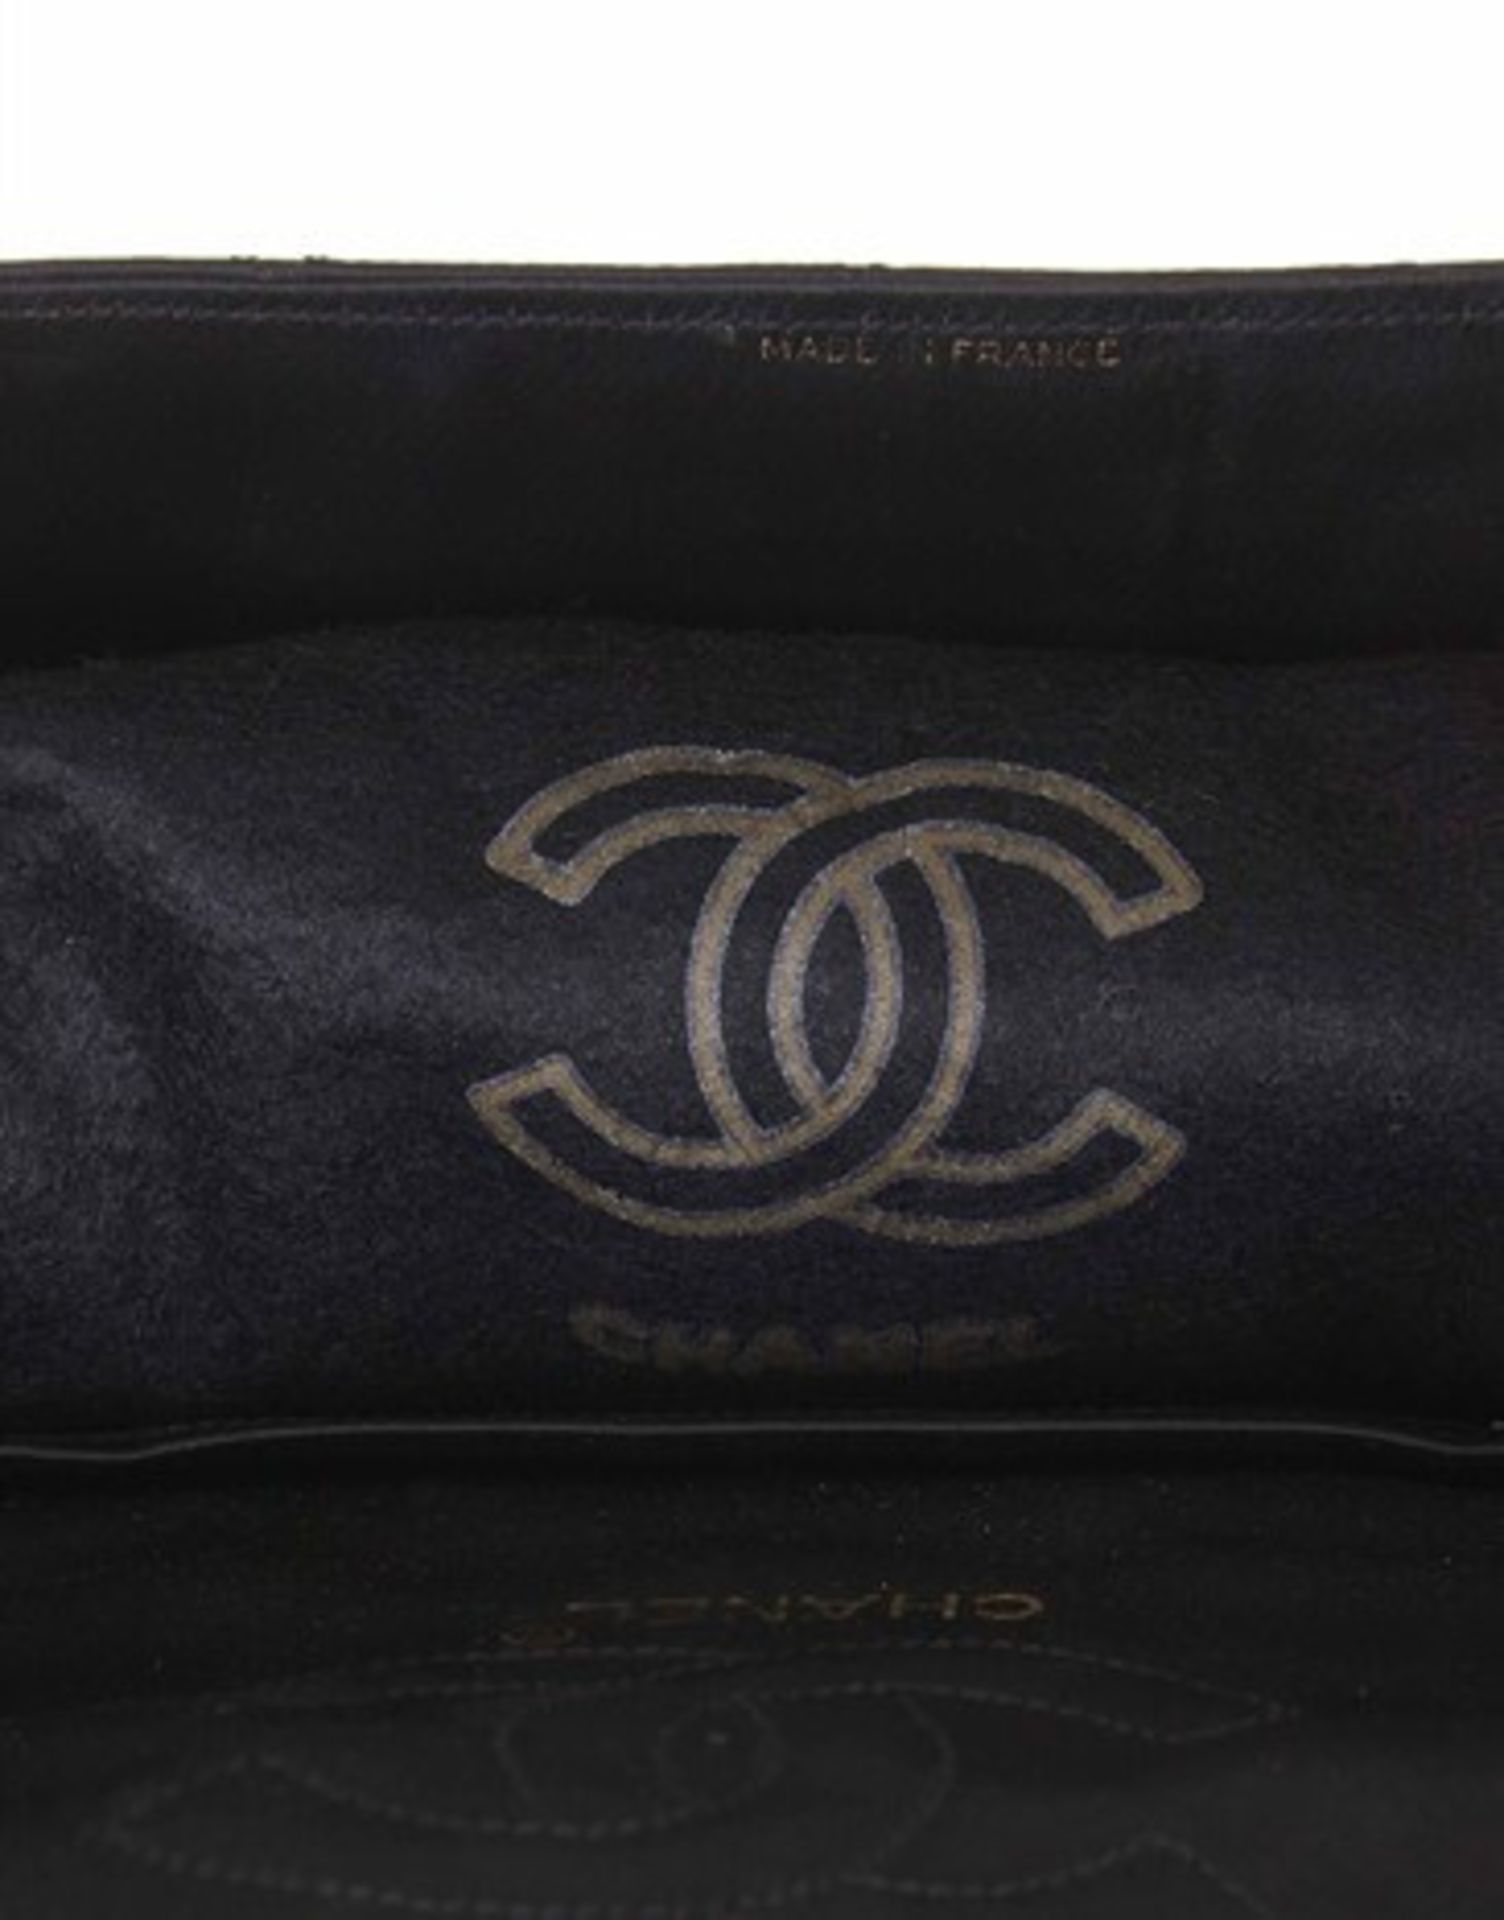 1980s Chanel Black Satin Bag - Image 5 of 5